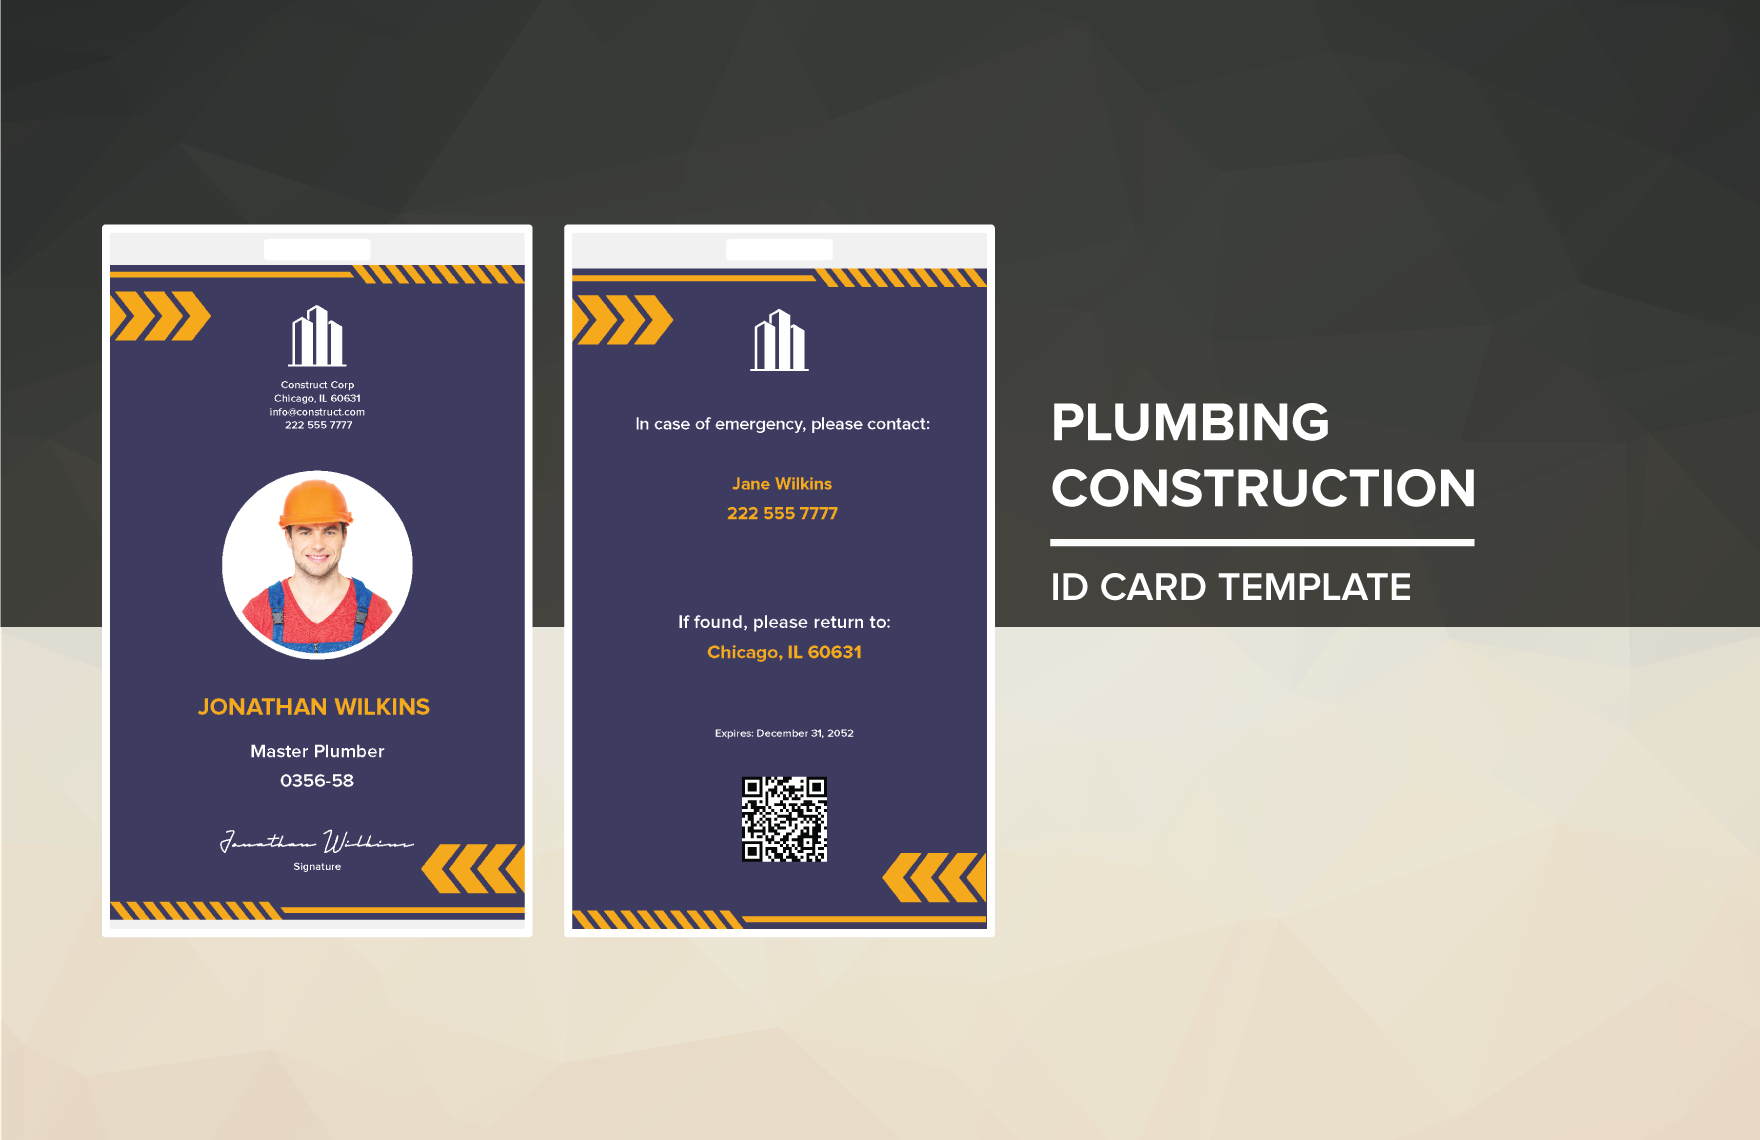 Plumbing Construction ID Card